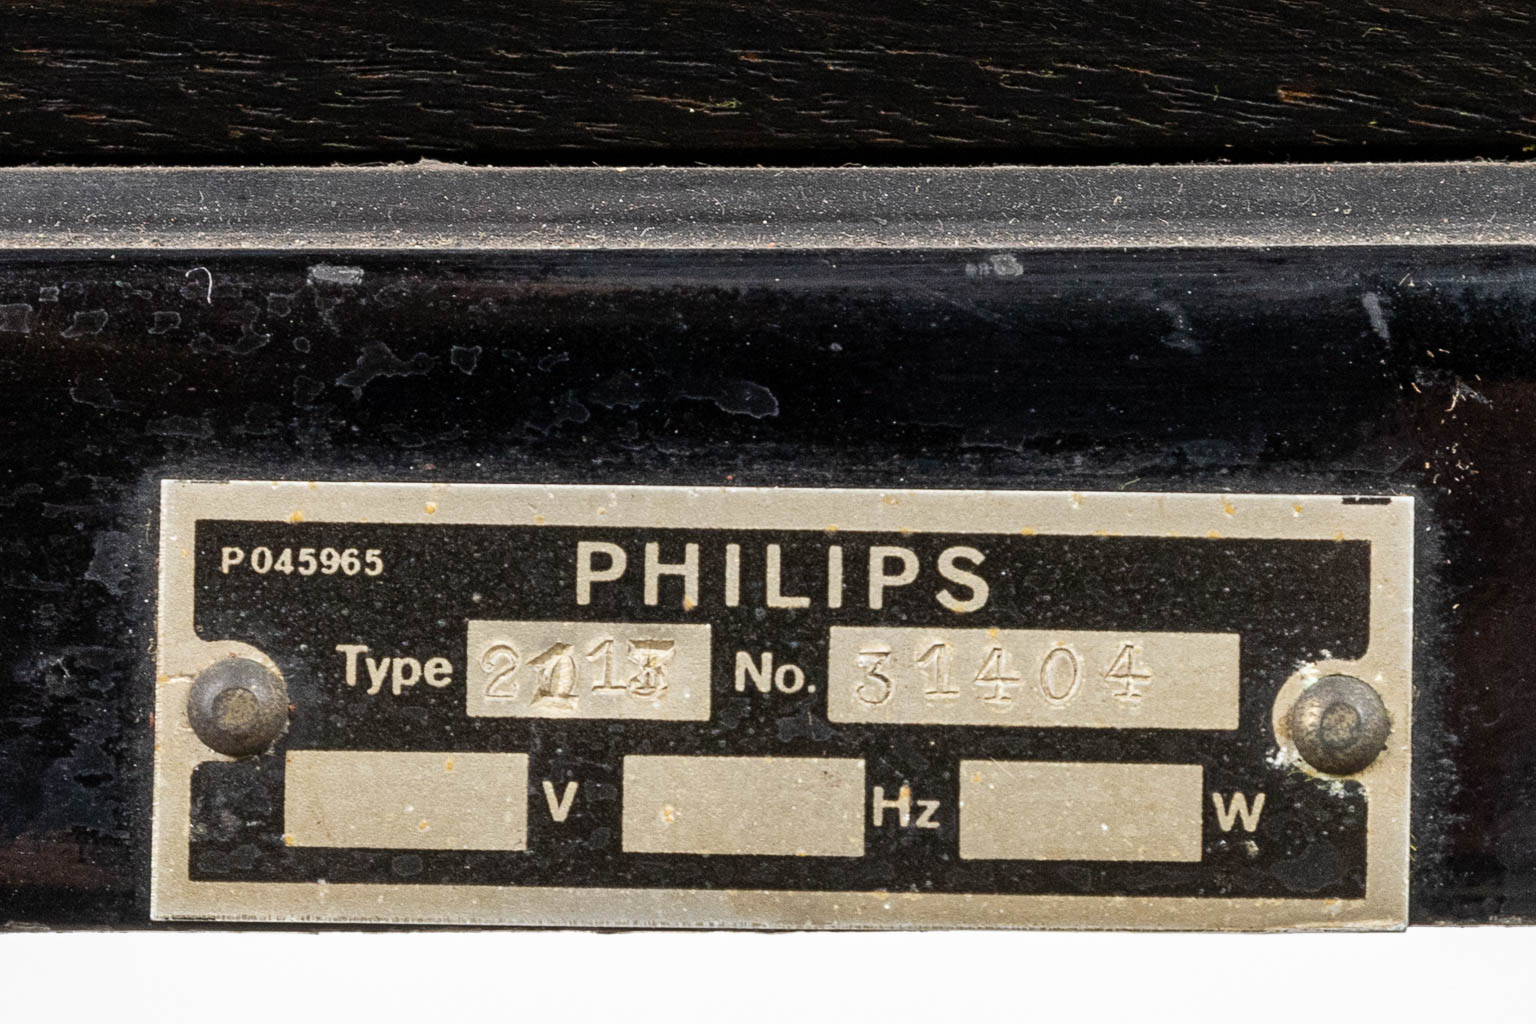 A vintage Philips radio made of Bakelite model 2113 